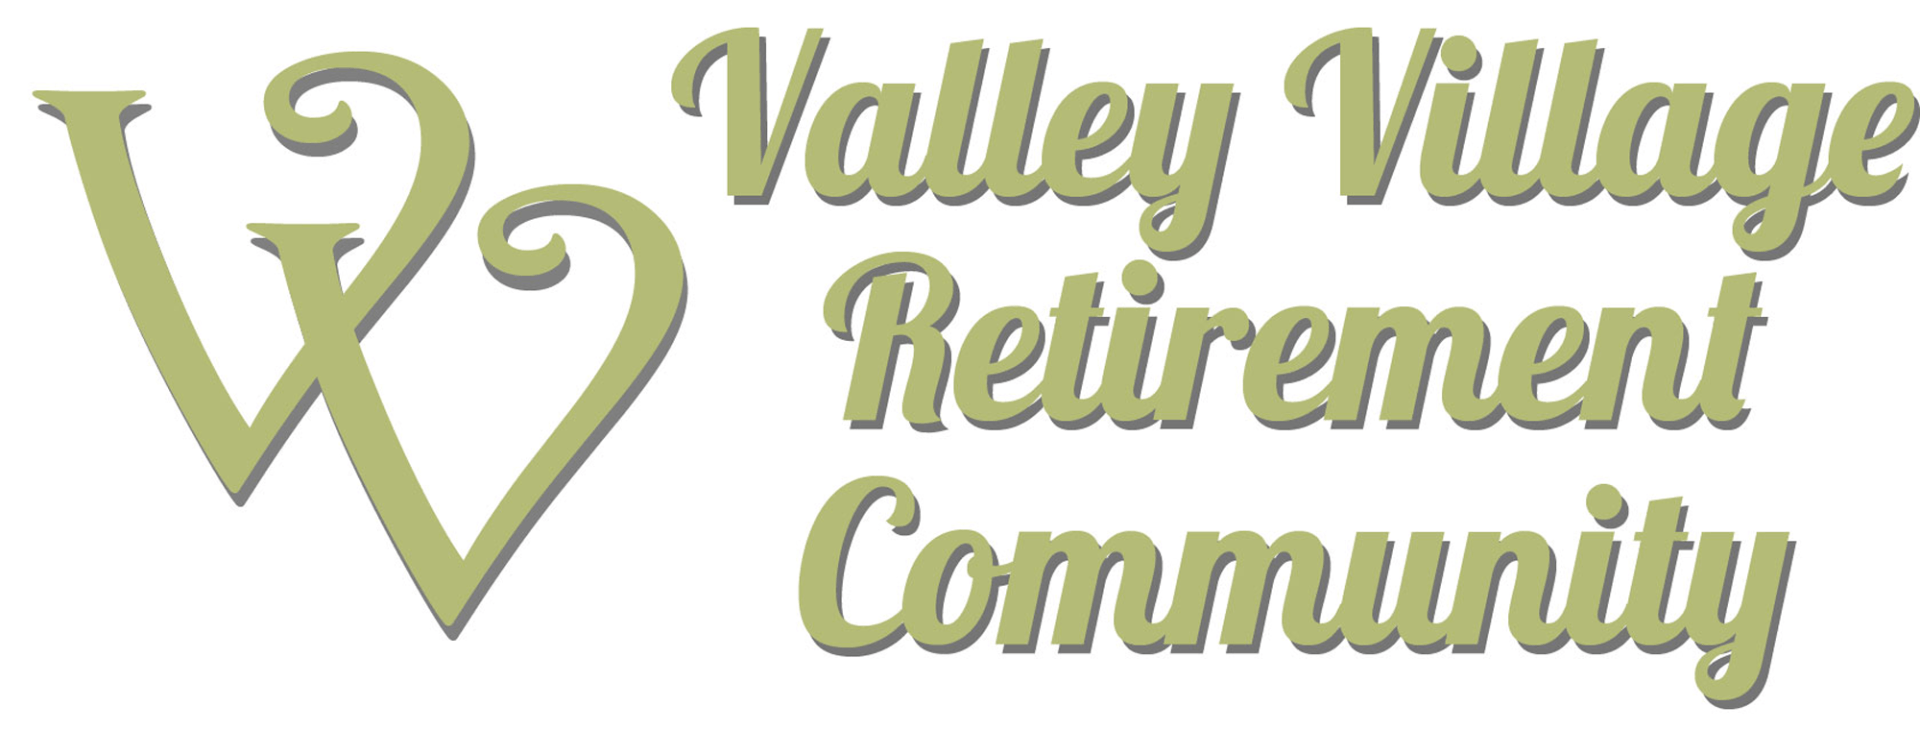 Availability Valley Village Retirement Community CA